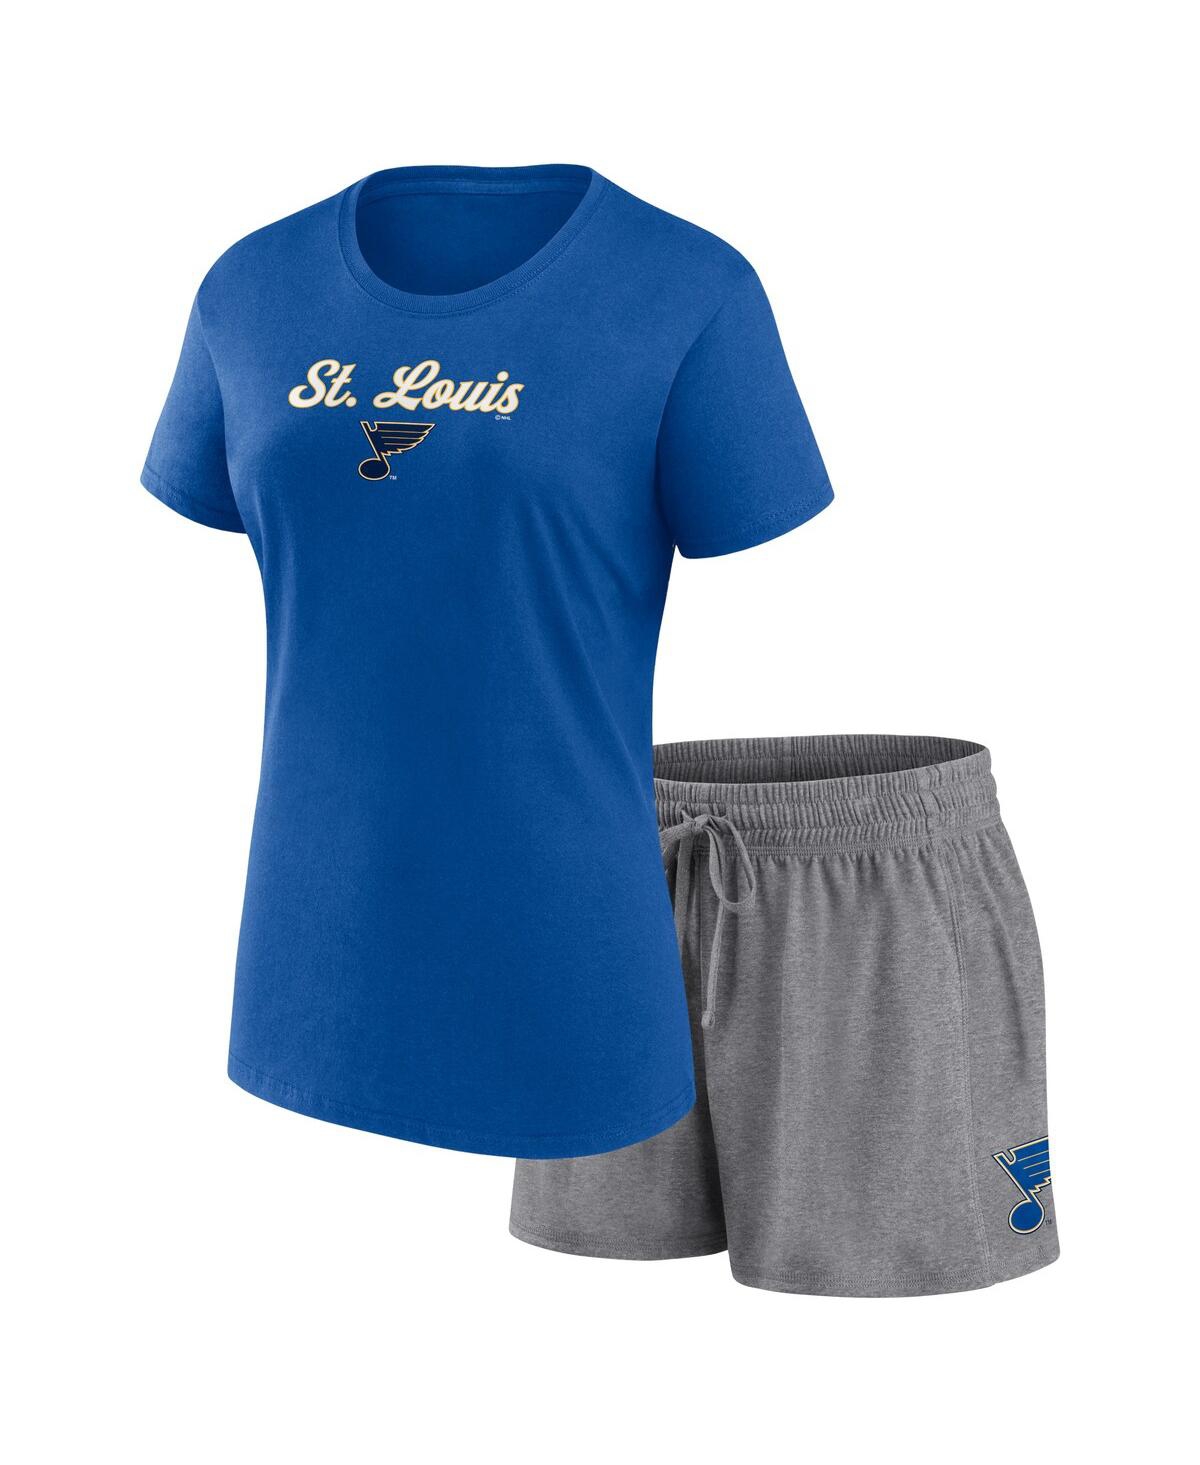 Women's Fanatics Blue, Gray St. Louis Blues Script T-shirt and Shorts Set - Blue, Gray